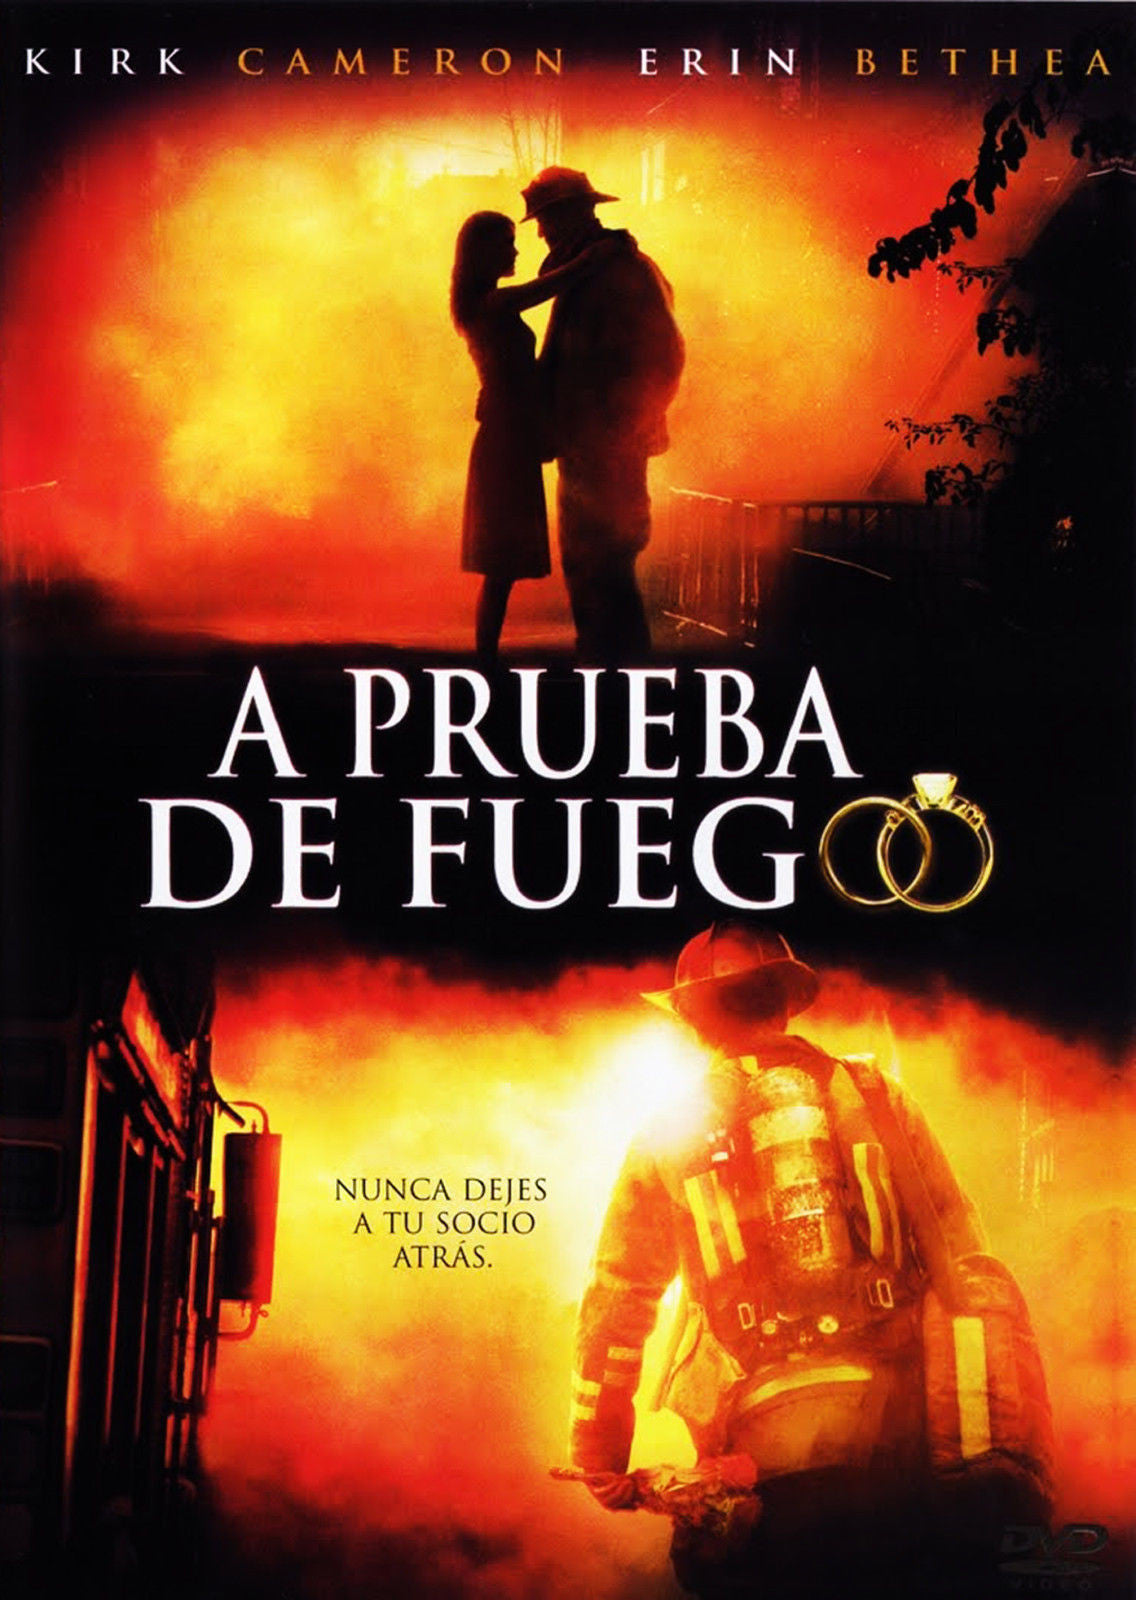 A PRUEBA DE FUEGO (FIREPROOF)English&Spanish audio - Teacher In Spanish